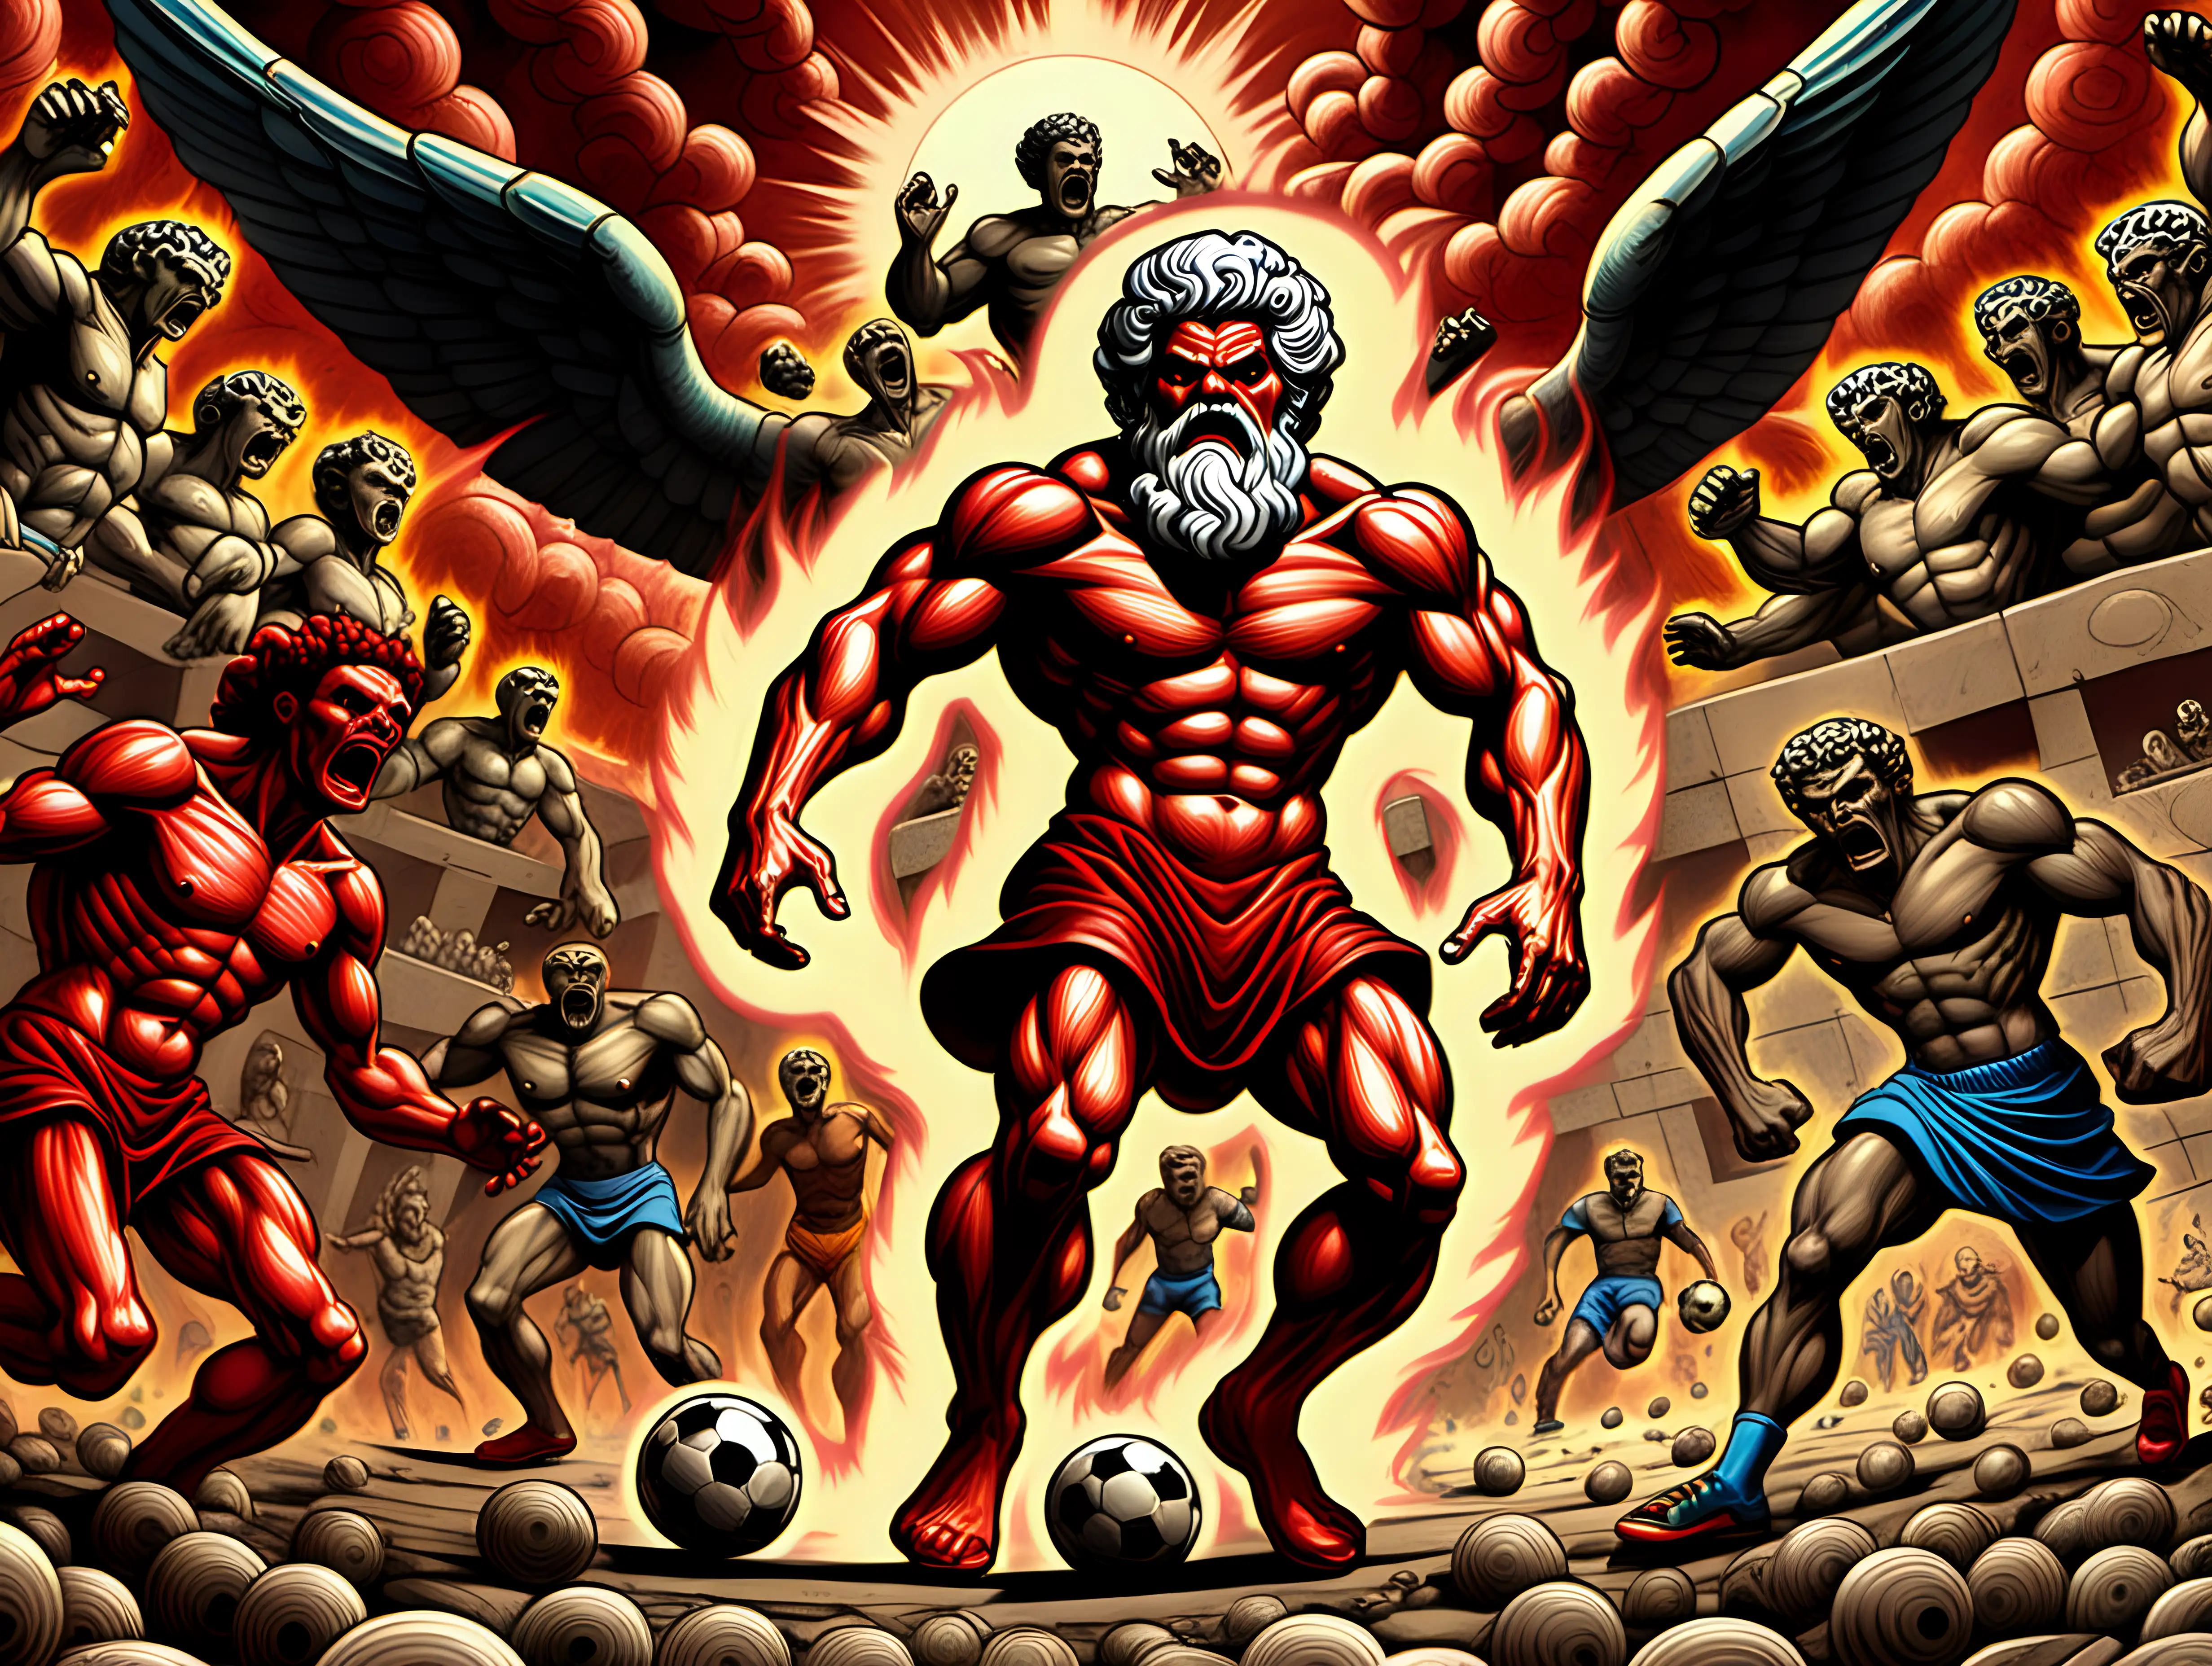 Zeus Soccer Showdown with Demons in Jack Kirby Style